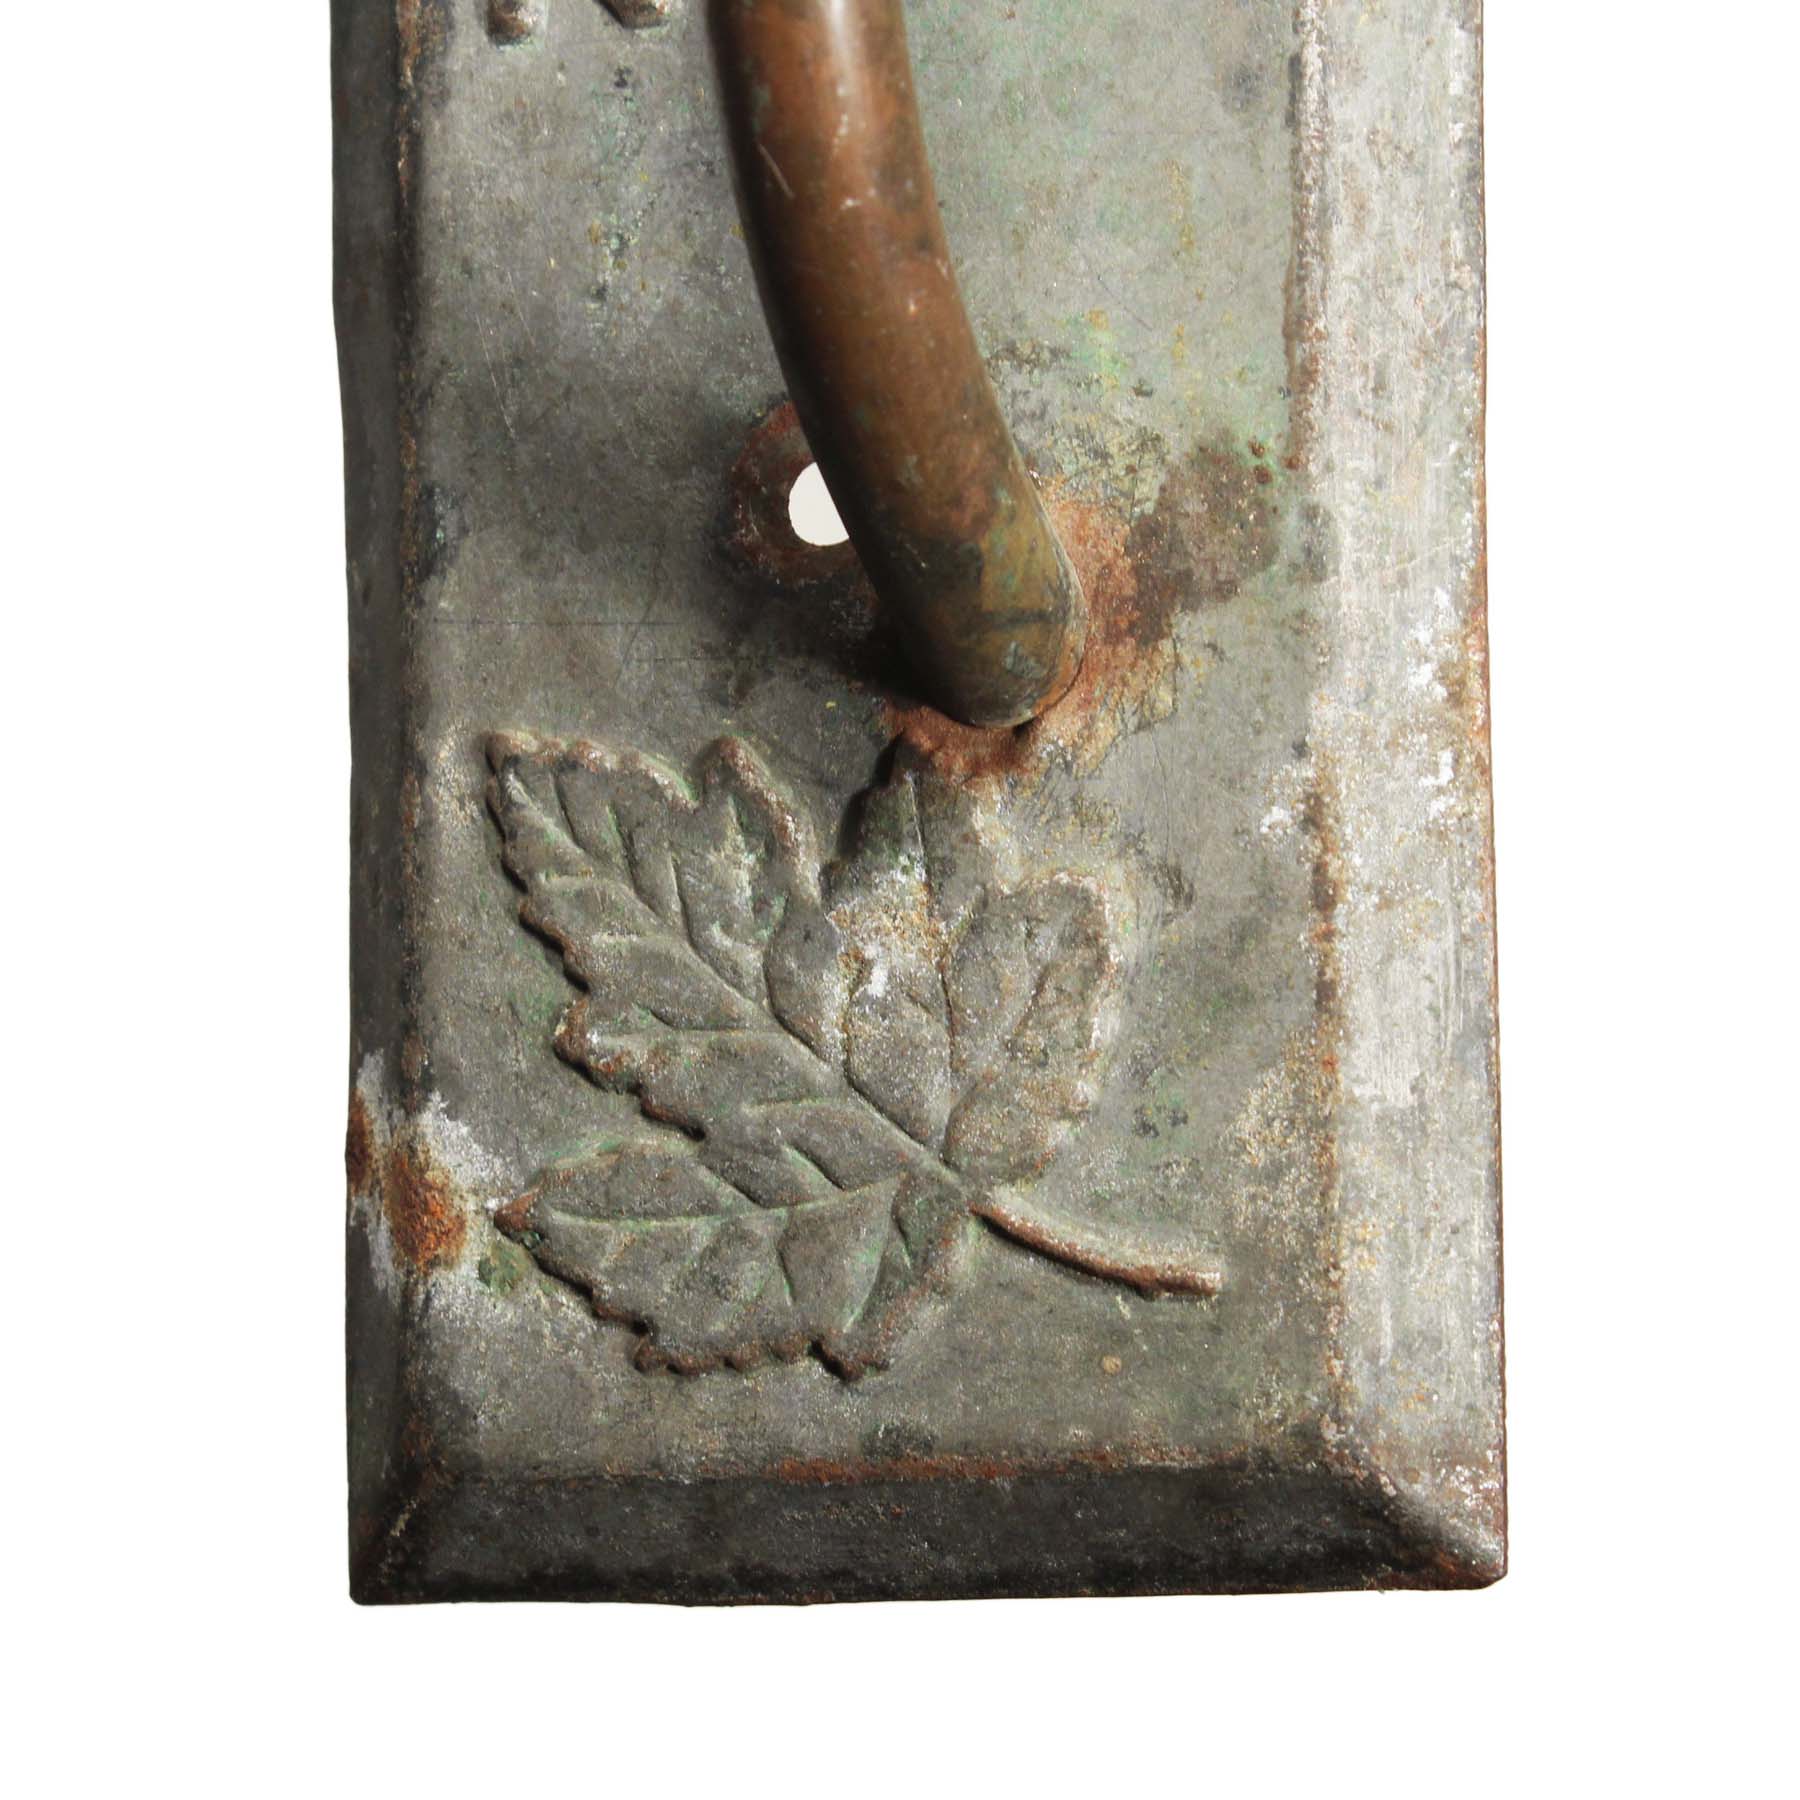 SOLD Antique Door Pull by C. E. Erickson Co. Inc.-67145